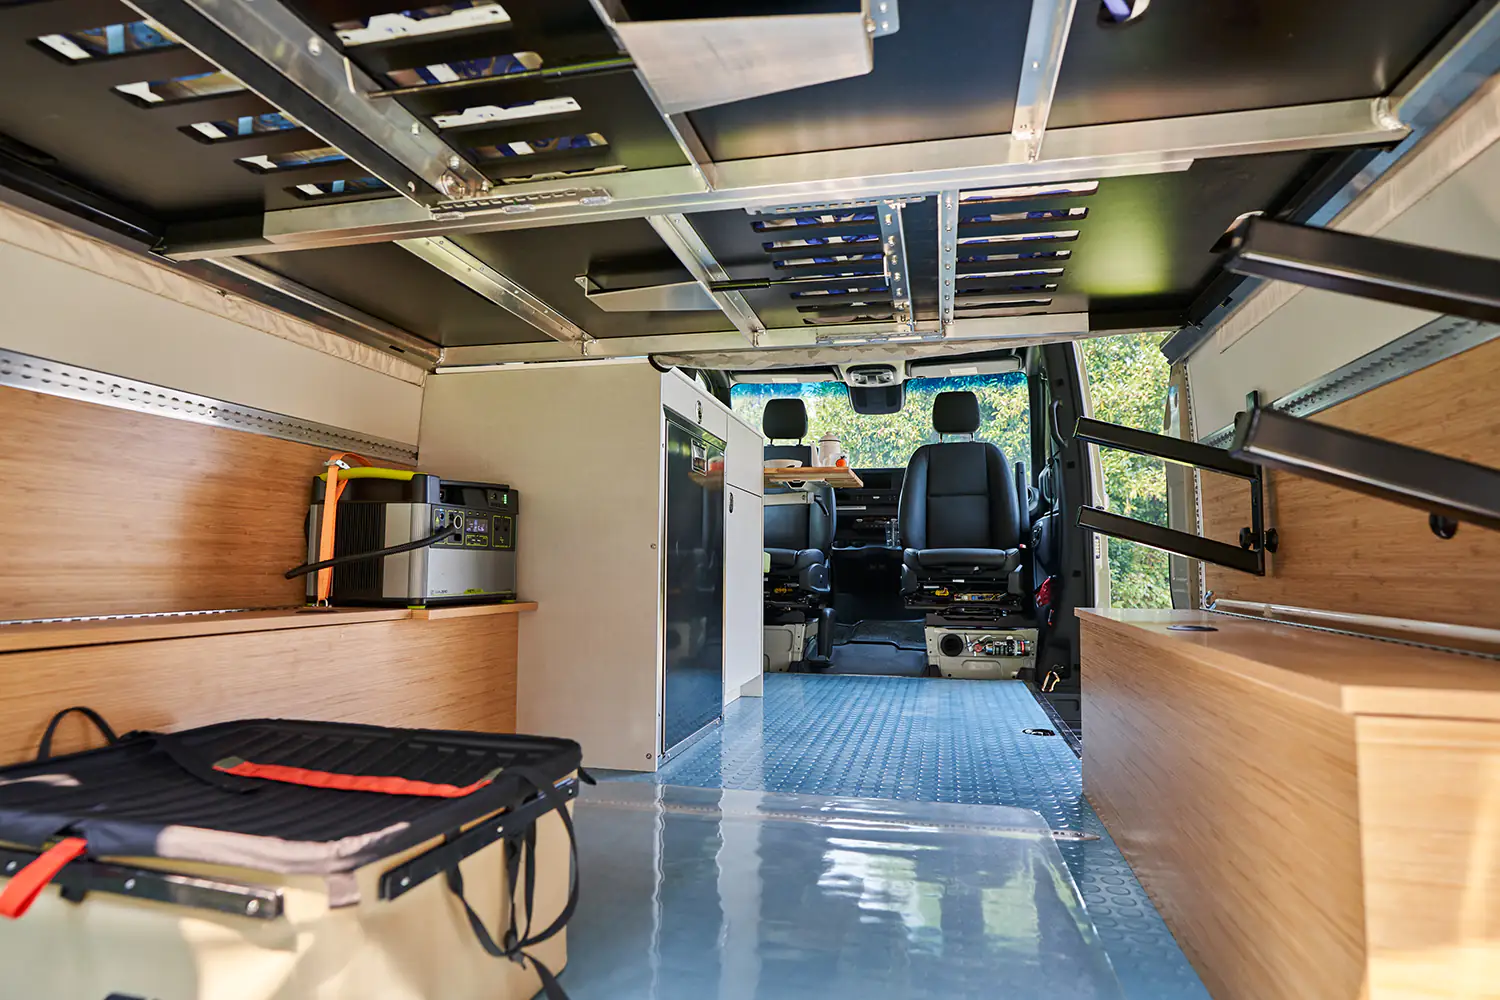 Oyster VS30 144WB HR 4x4 2500 Nomad Vanz Adventure Wagon Hybrid Conversion